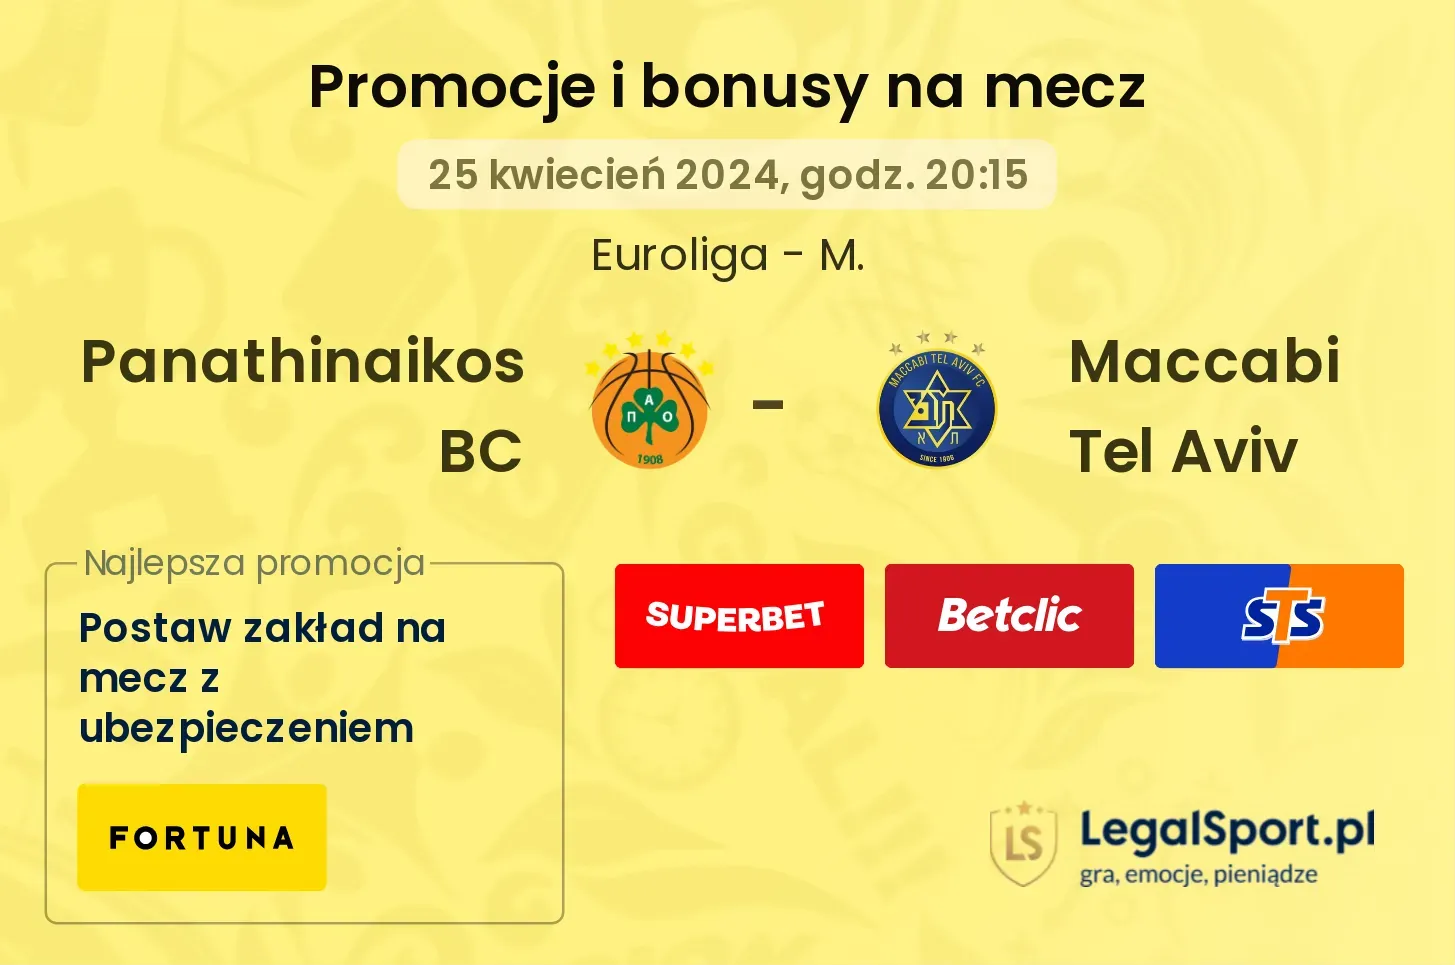 Panathinaikos BC - Maccabi Tel Aviv promocje bonusy na mecz